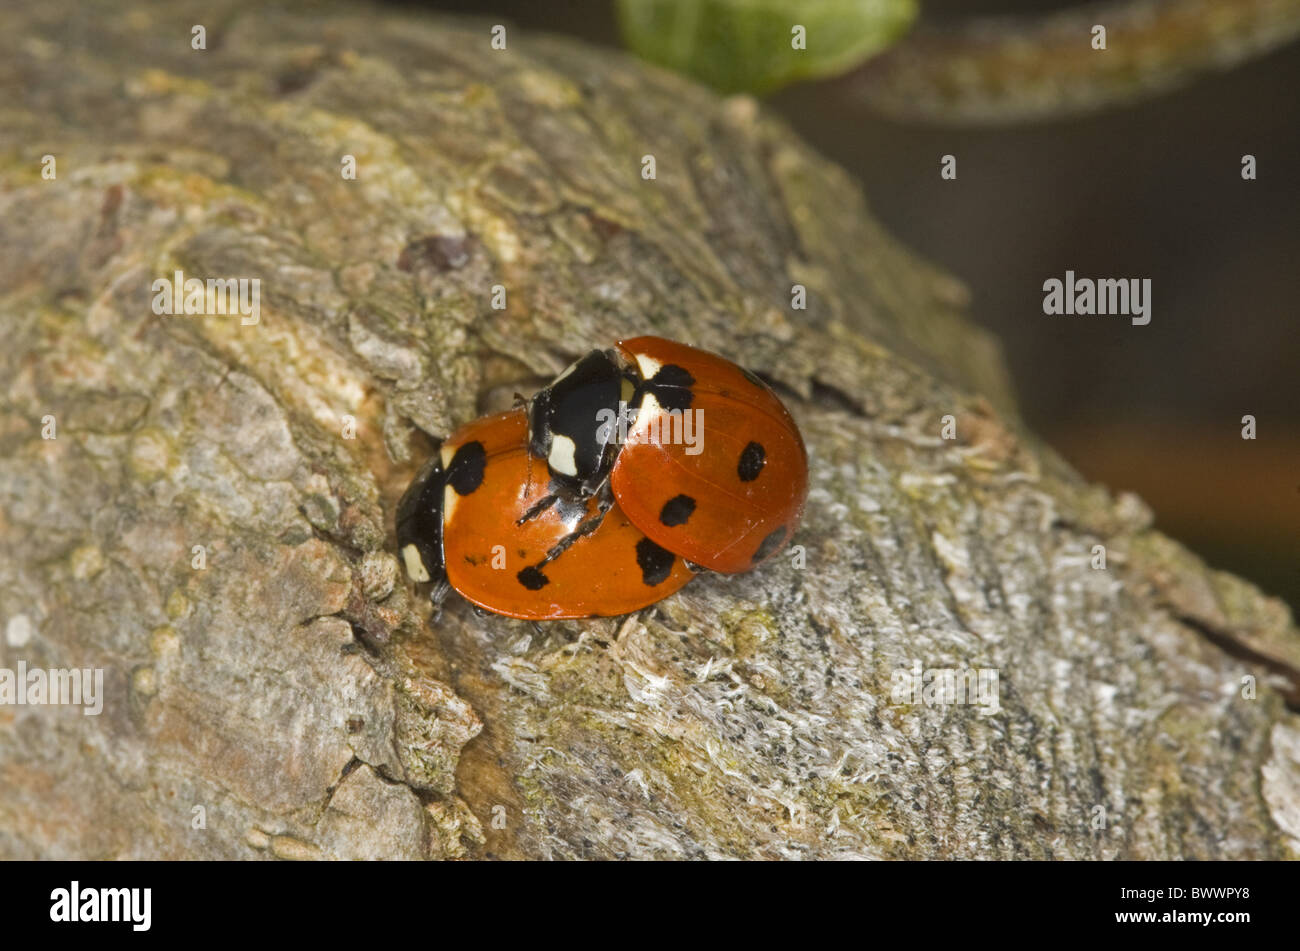 invertebrate invertebrates animal animals arthropod arthropods insect insects beetle beetles ladybird ladybirds europe european Stock Photo